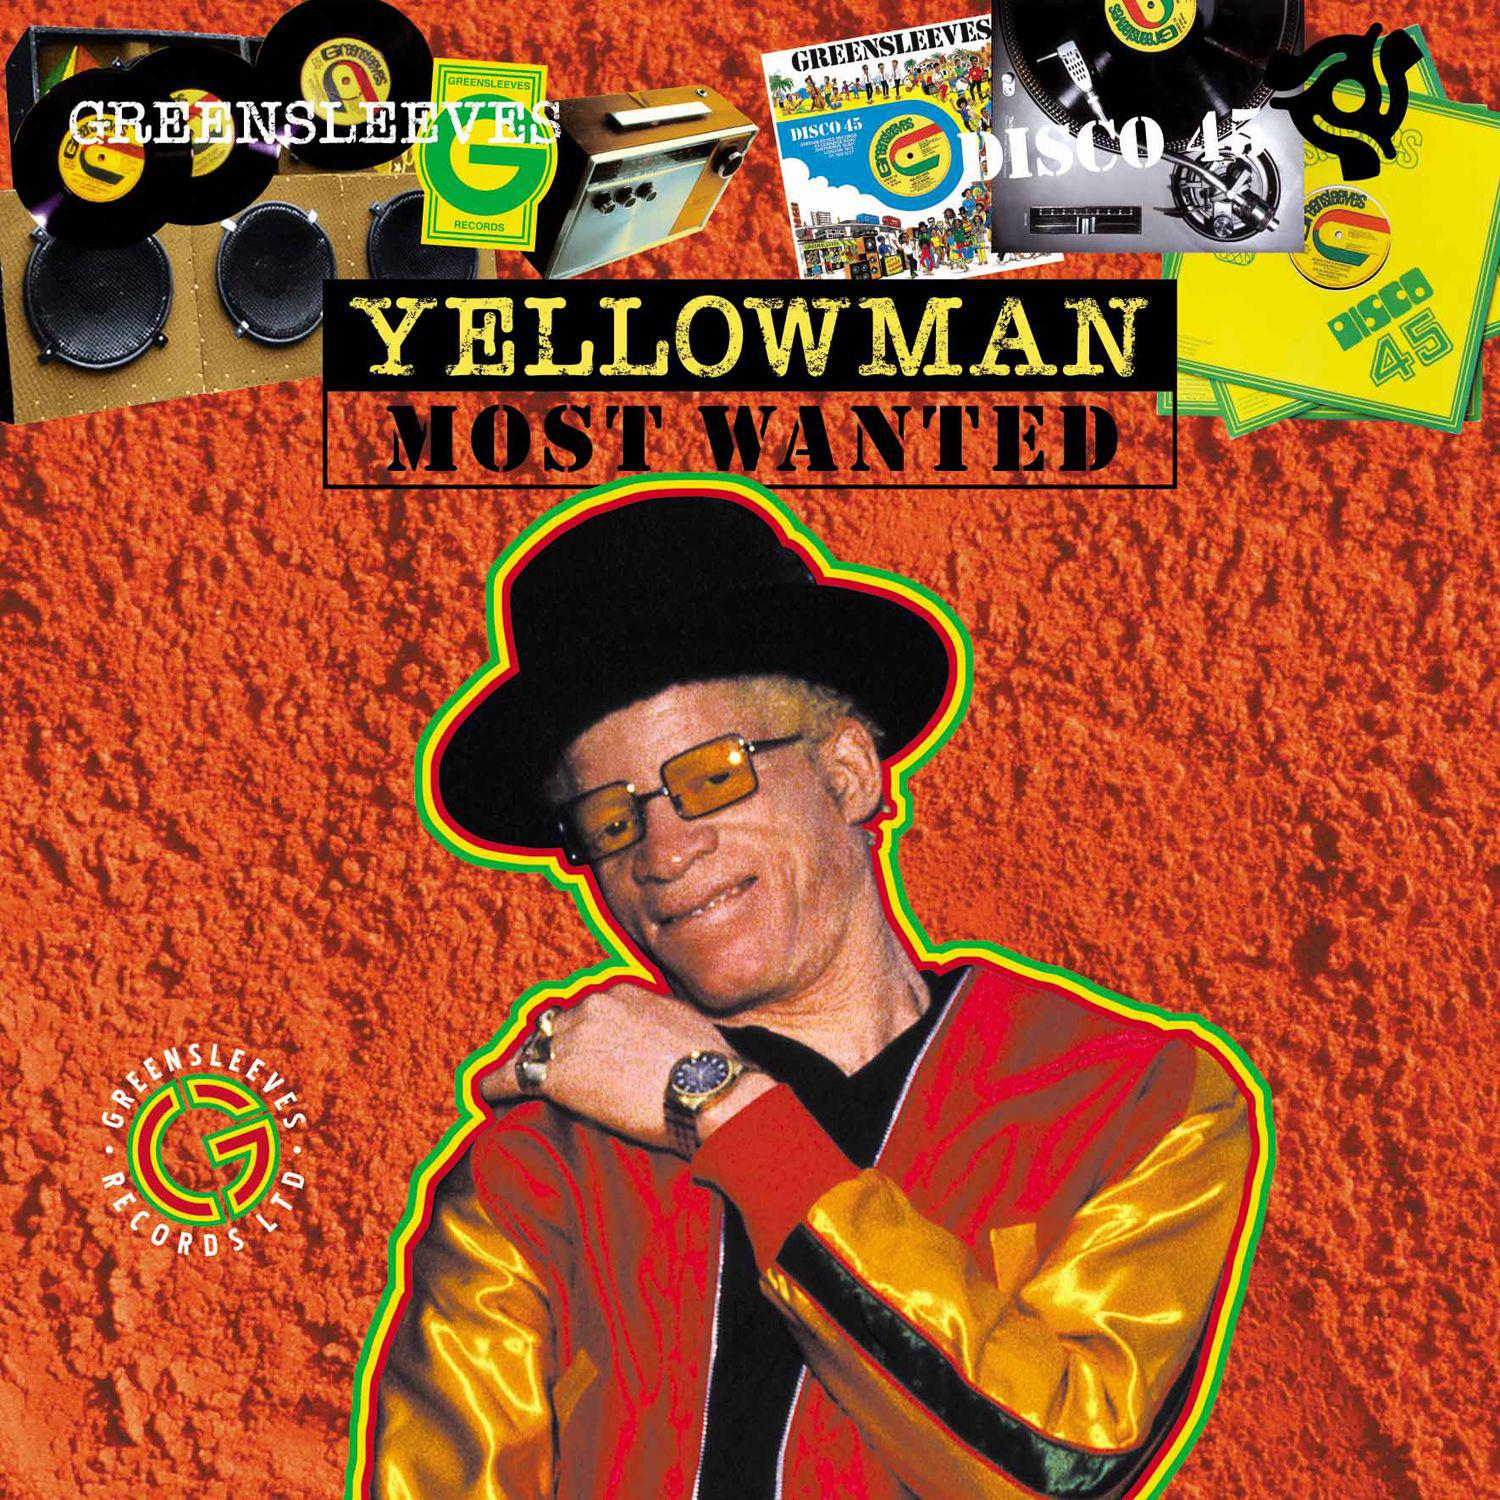 Yellowman - Morning Ride